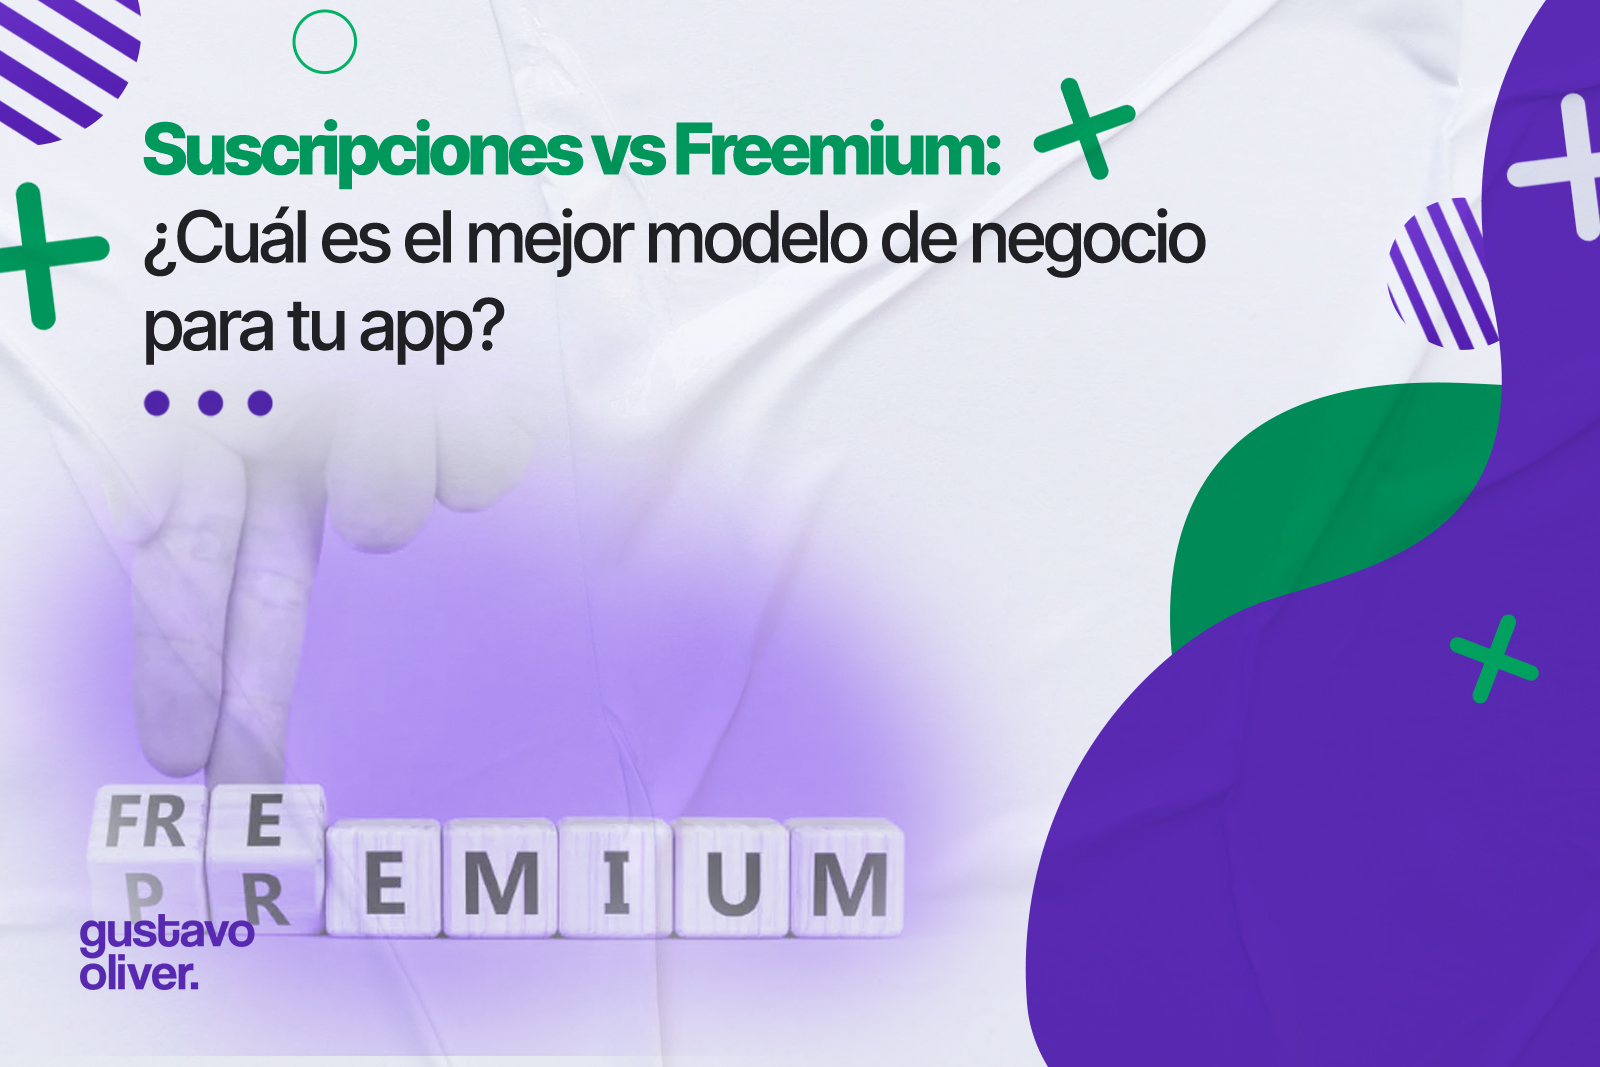 Suscripciones vs Freemium, el mejor para apps